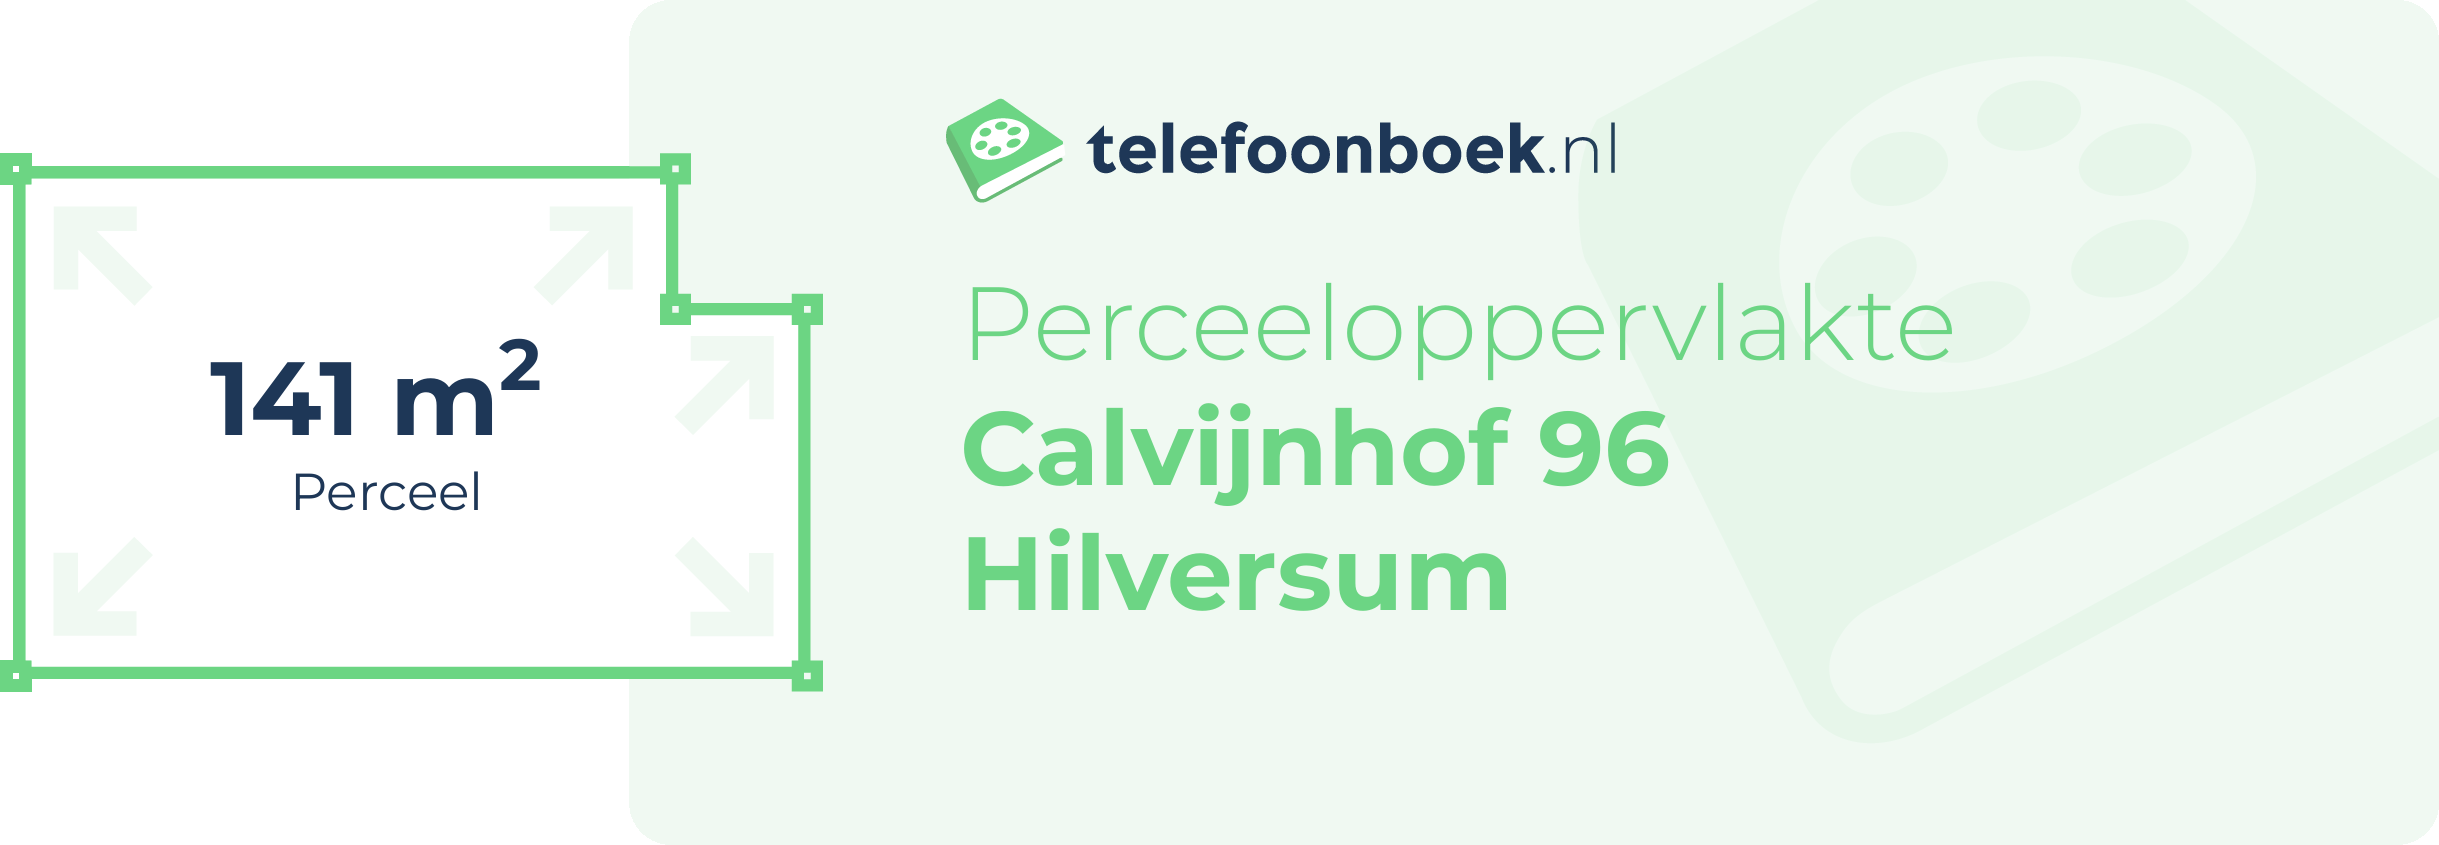 Perceeloppervlakte Calvijnhof 96 Hilversum